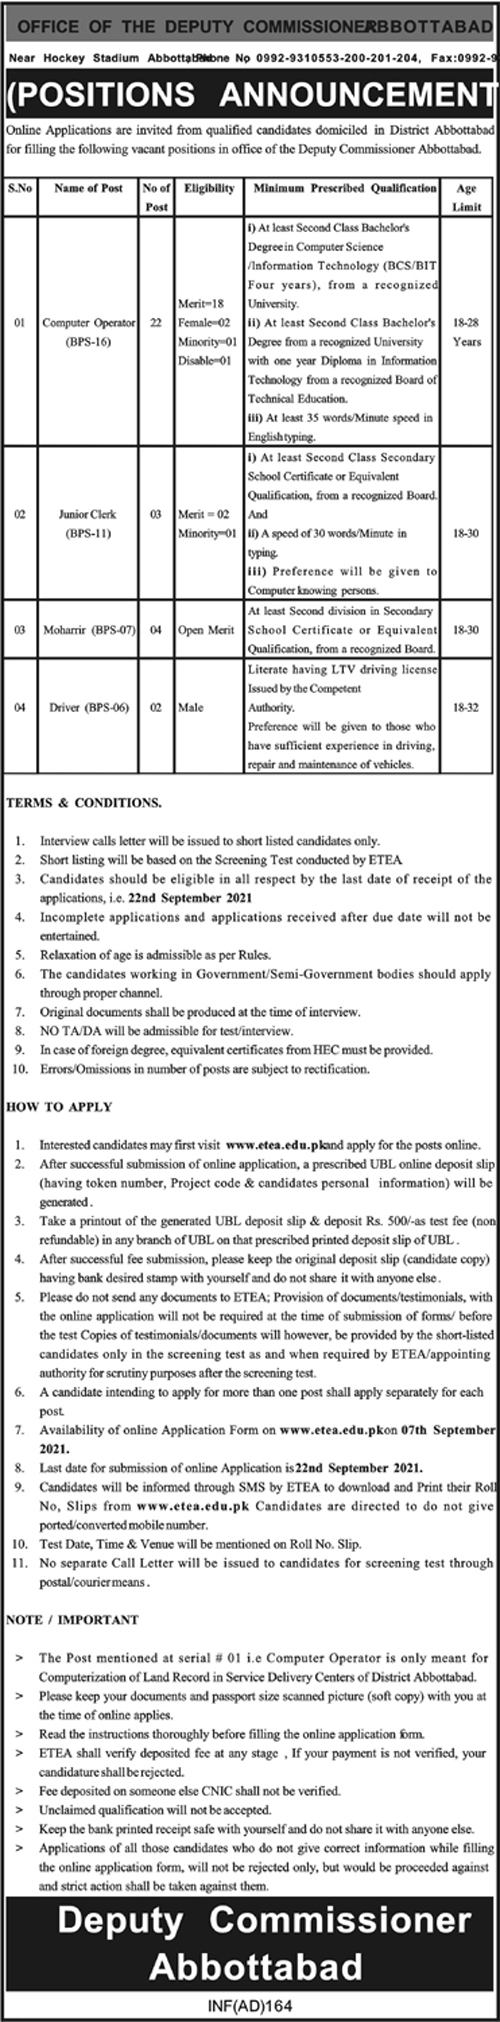 Deputy Commissioner Office Abbottabad Jobs 2021